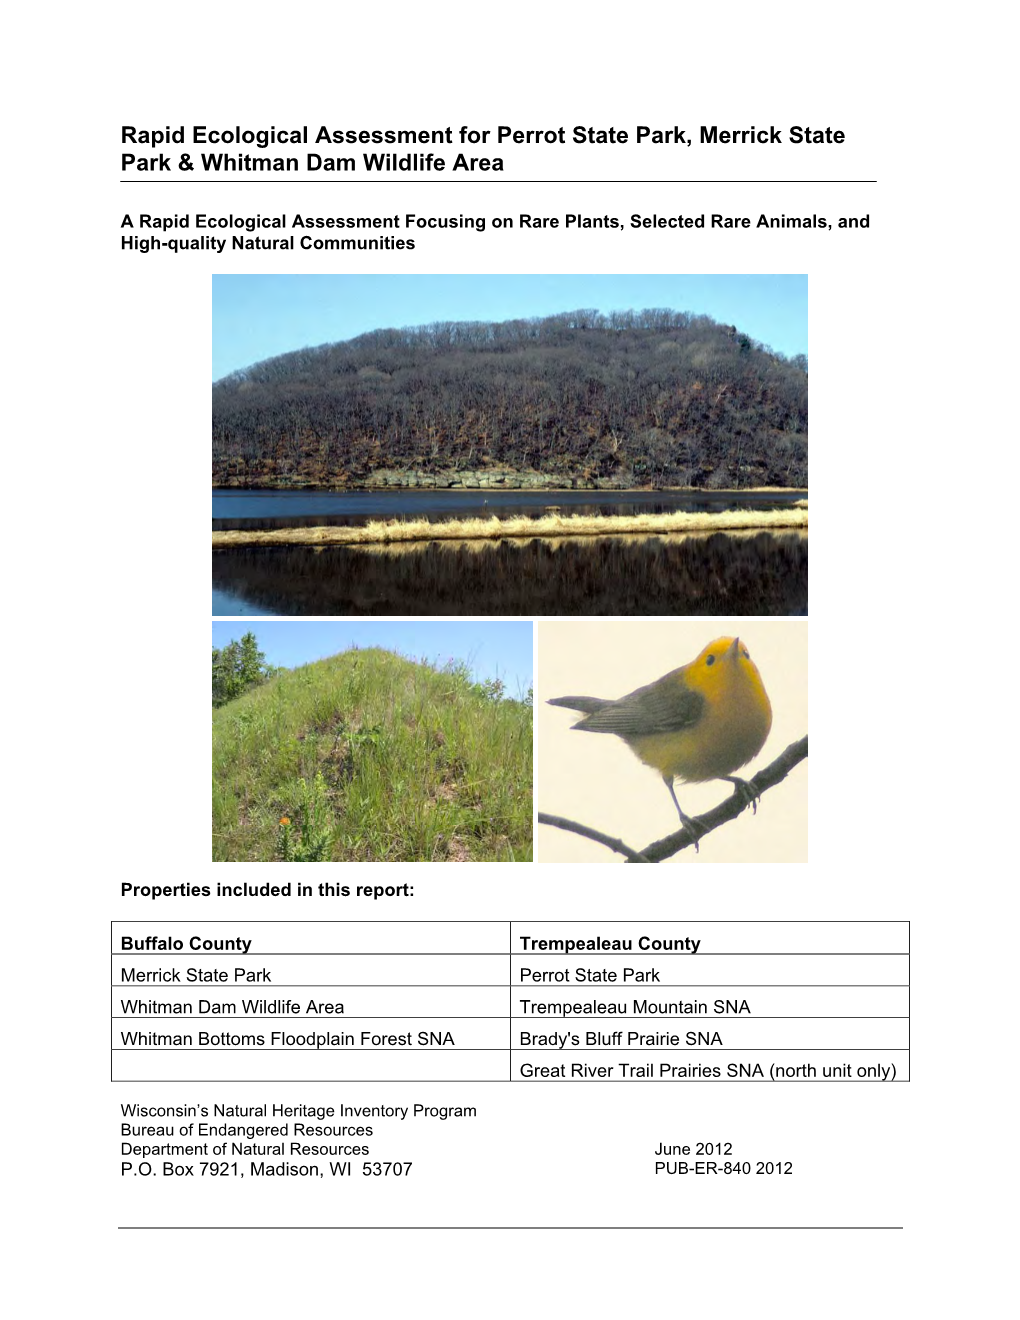 Rapid Ecological Assessment for Perrot State Park, Merrick State Park & Whitman Dam Wildlife Area